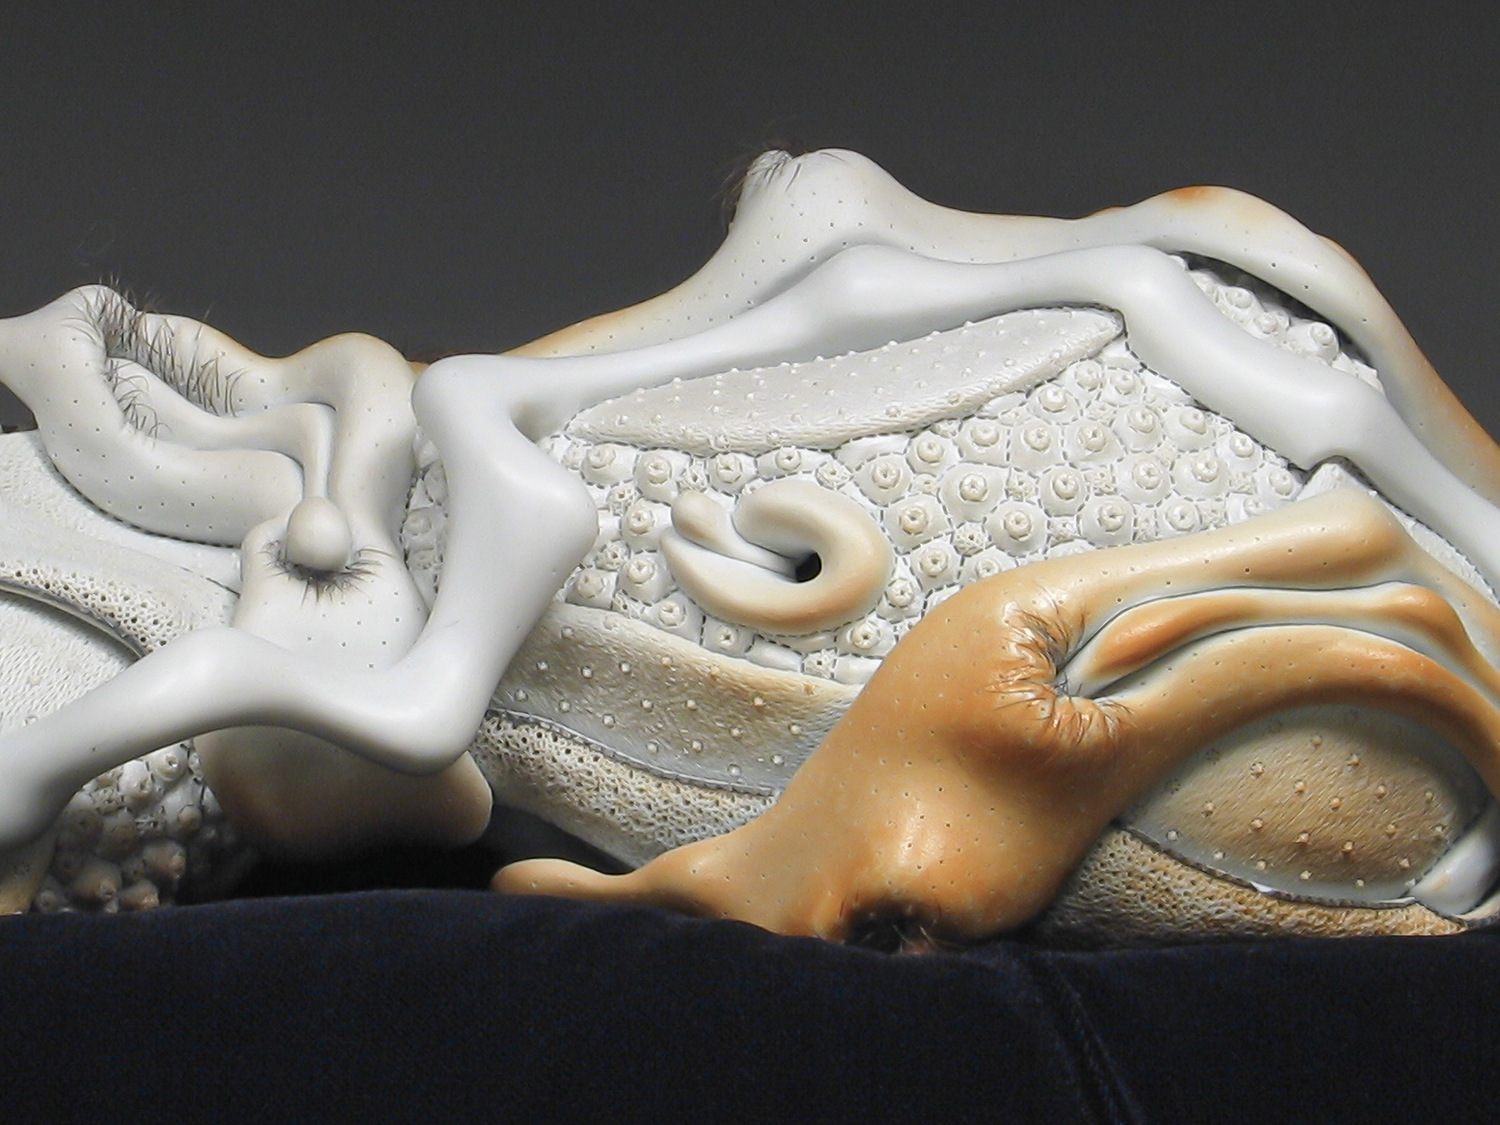 Jason Briggs "Rest" (detail). Porcelain, hair, and mixed media. Sculptural ceramic art object.